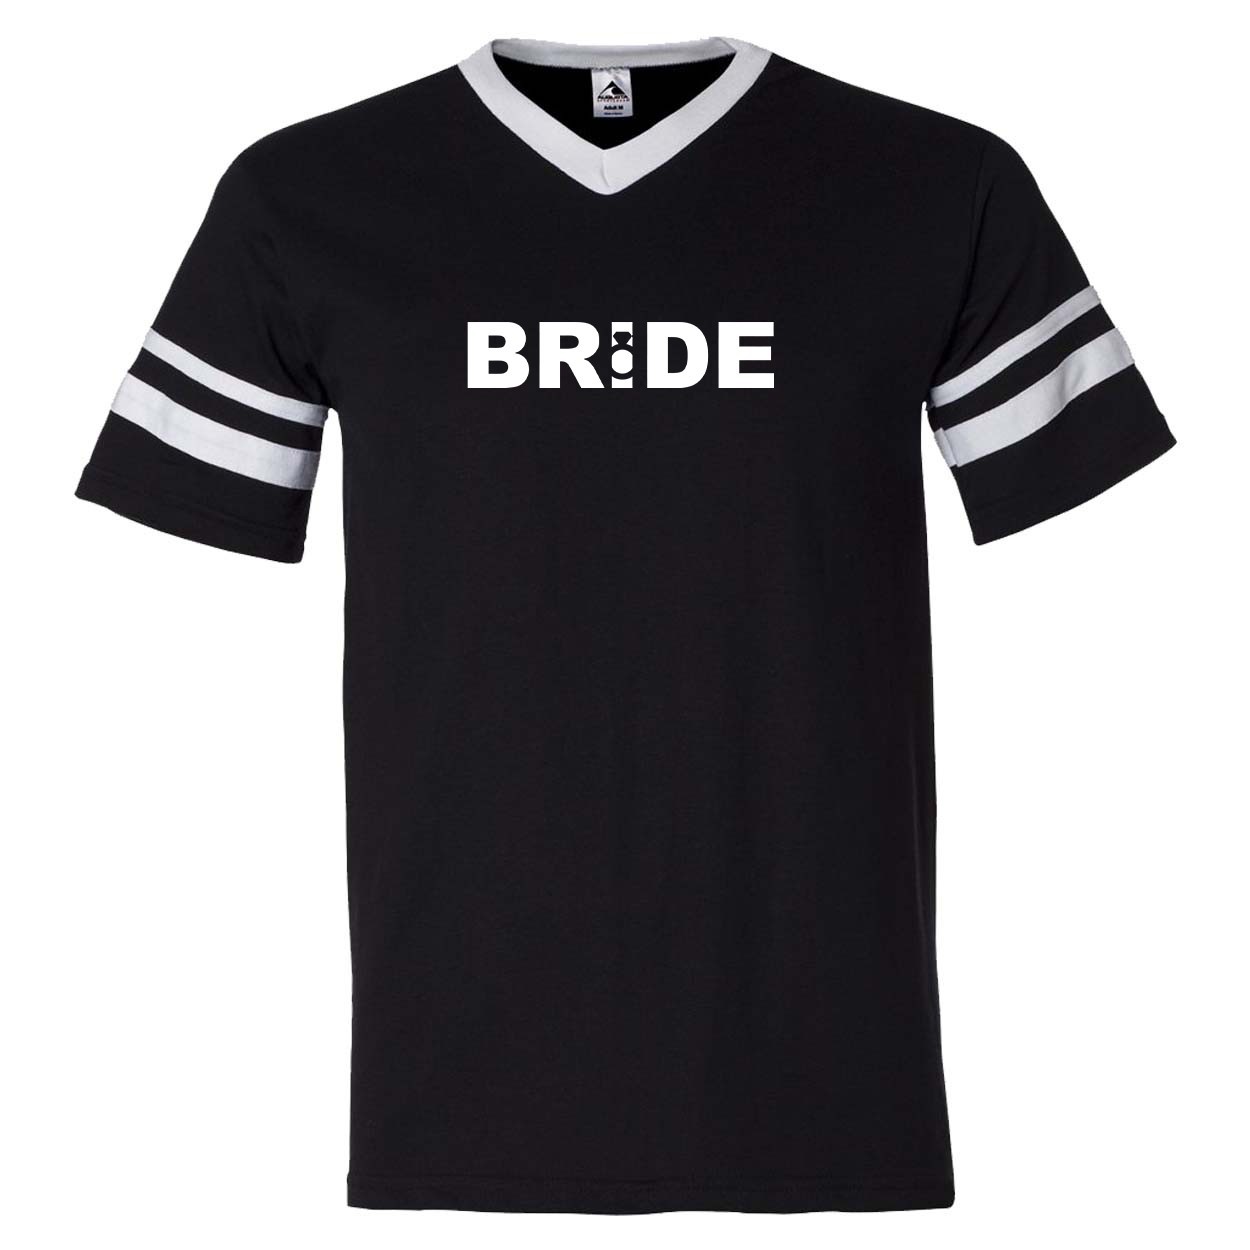 Bride Ring Logo Classic Premium Striped Jersey T-Shirt Black/White (White Logo)